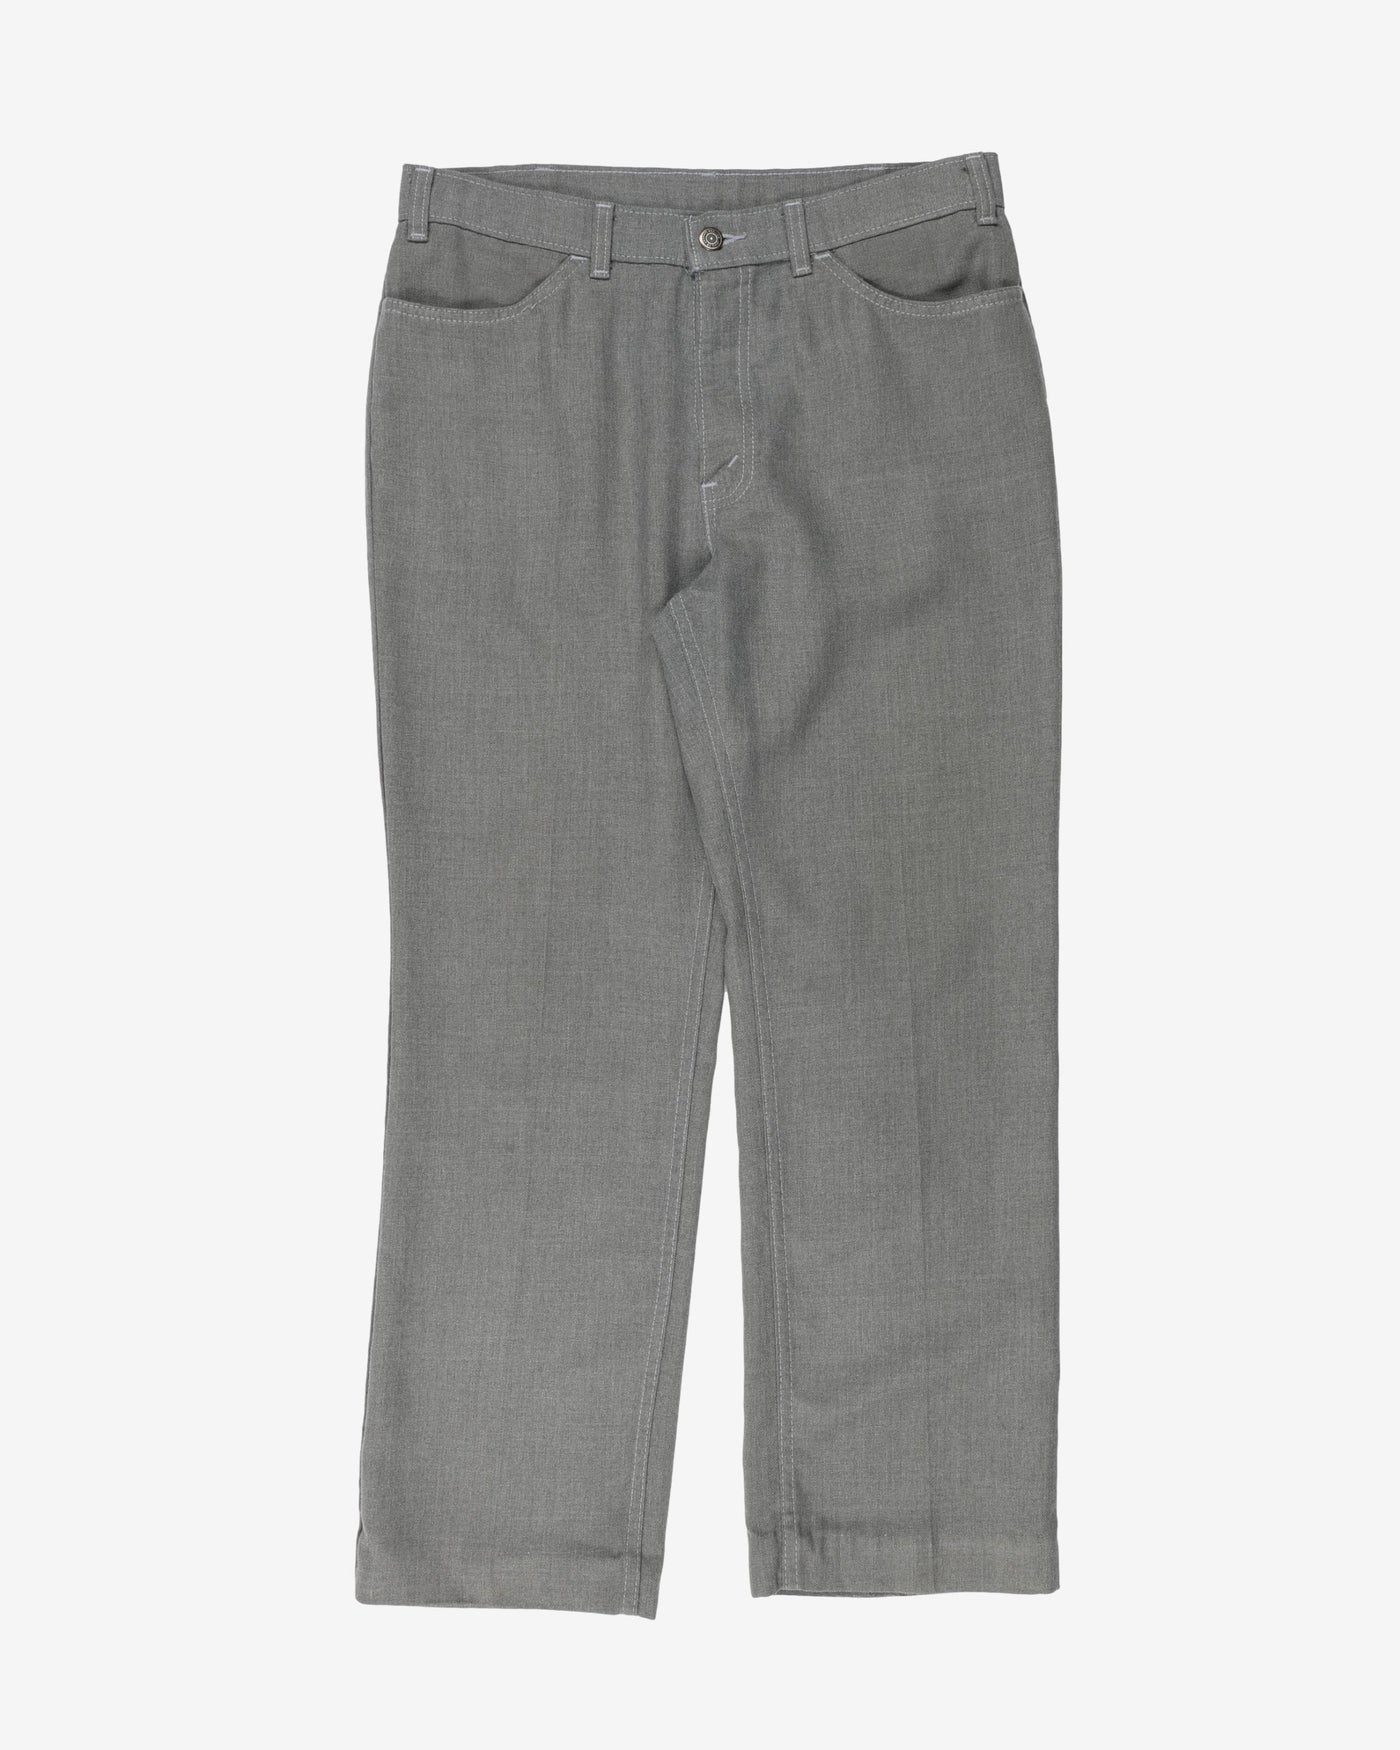 Vintage GWG Light Grey Suit / Smart Trousers - W32 L27